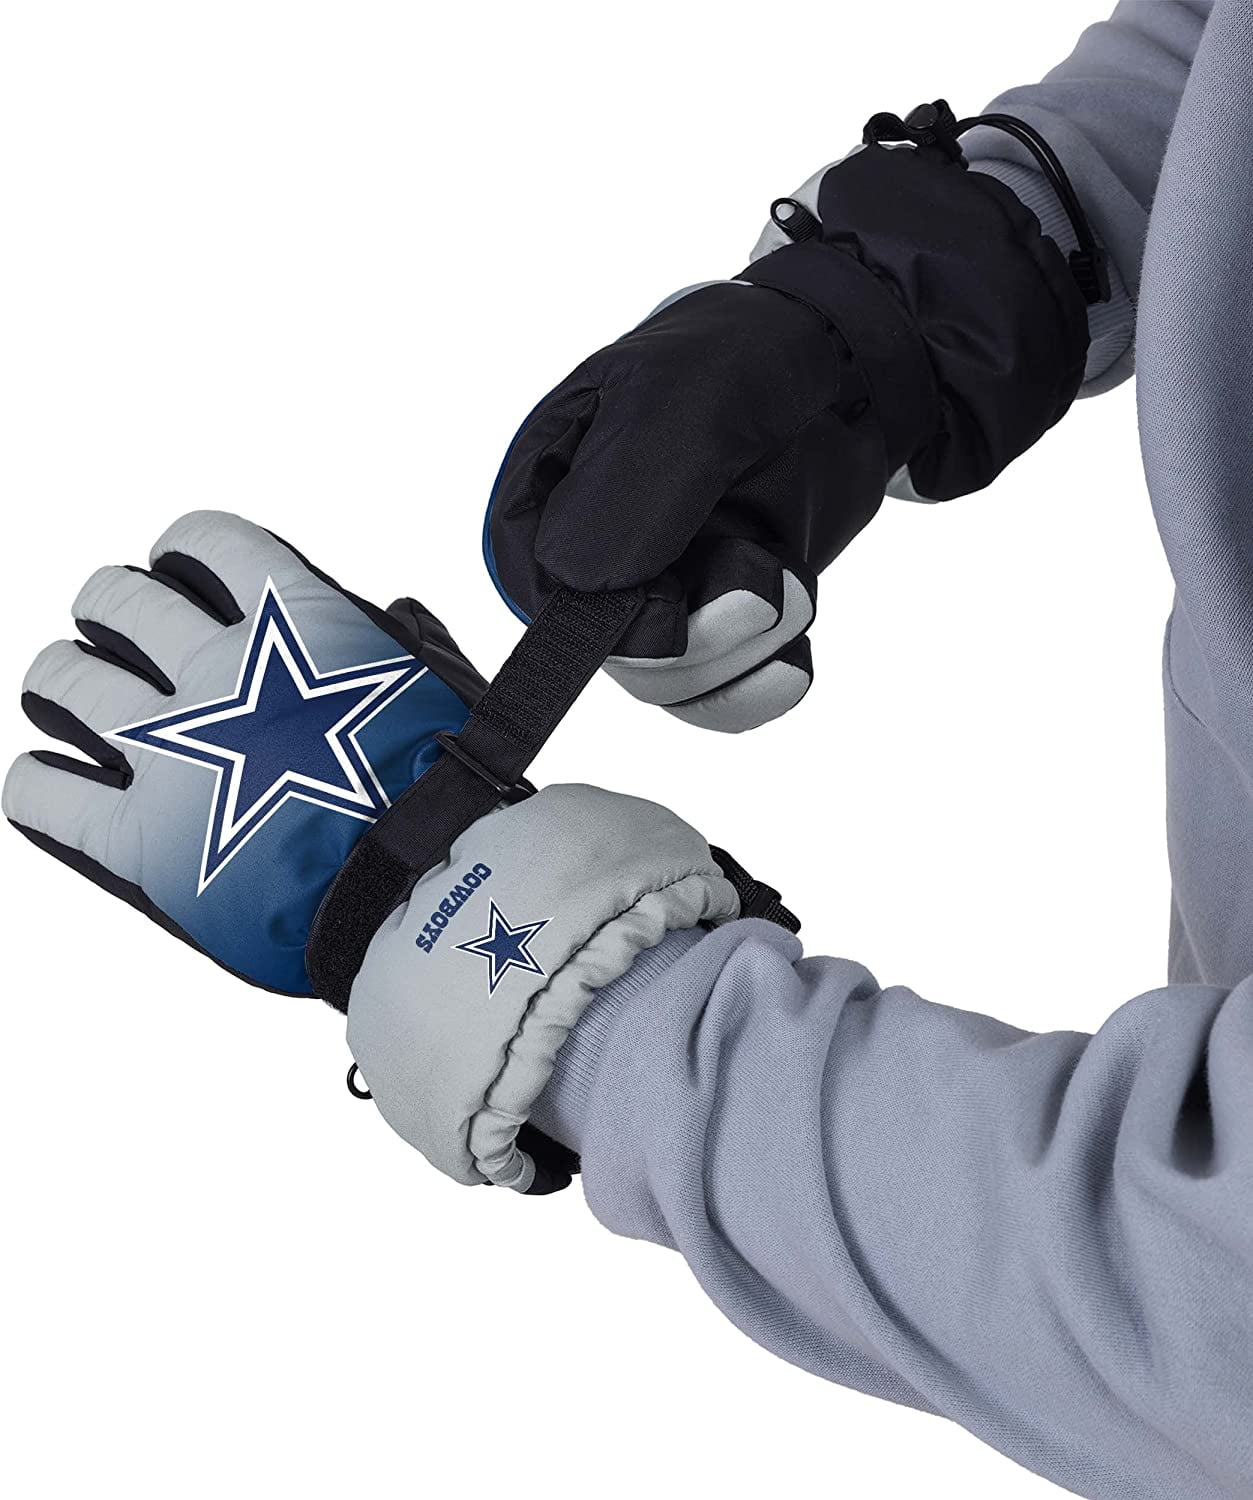 cowboys gloves